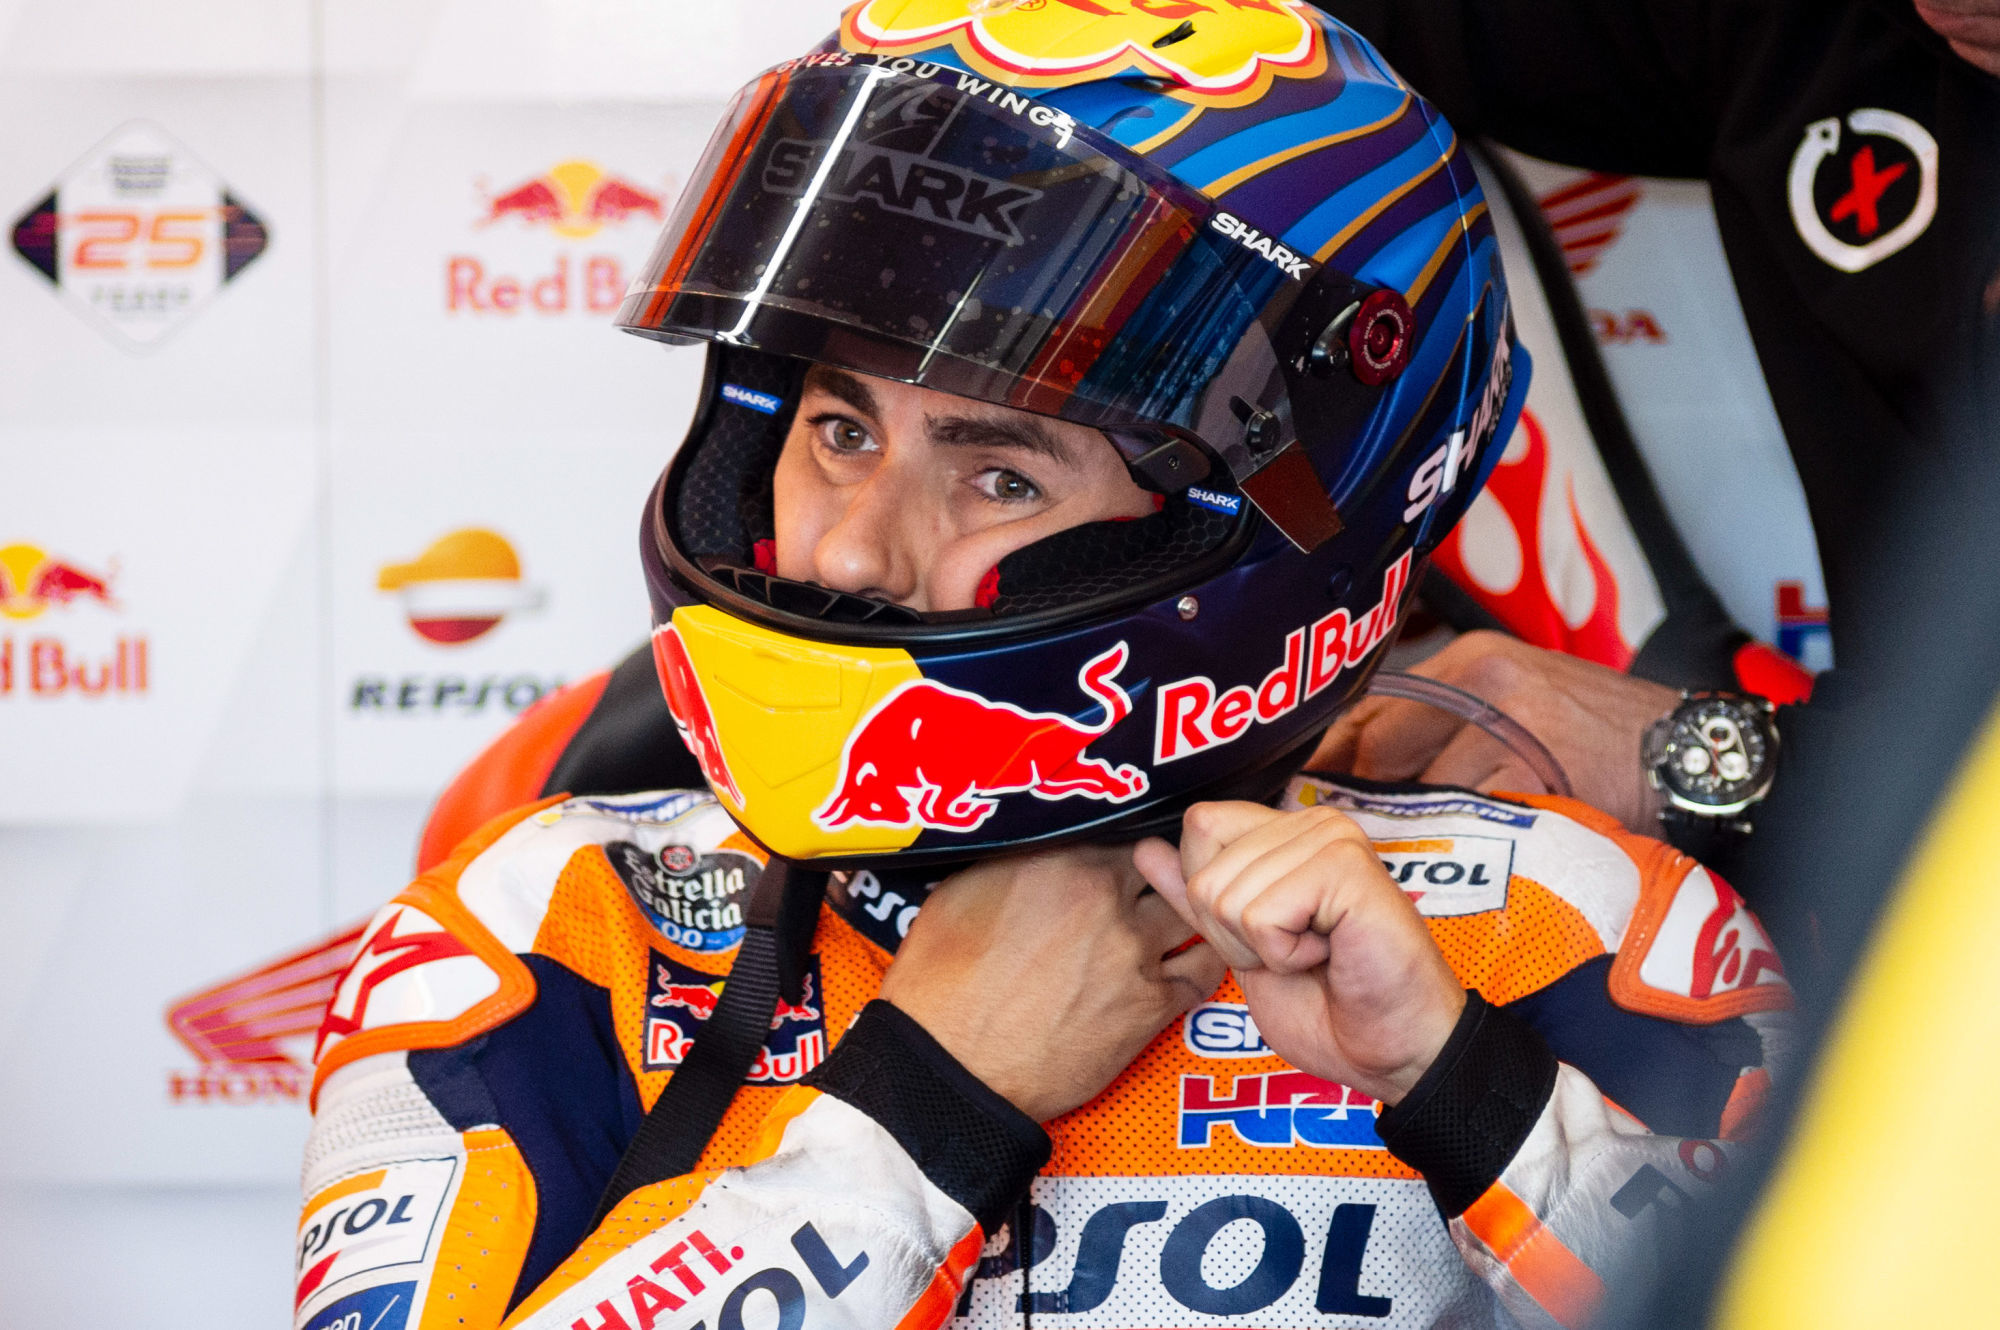 Jorge Lorenzo MotoGP  
Photo : Icon Sport